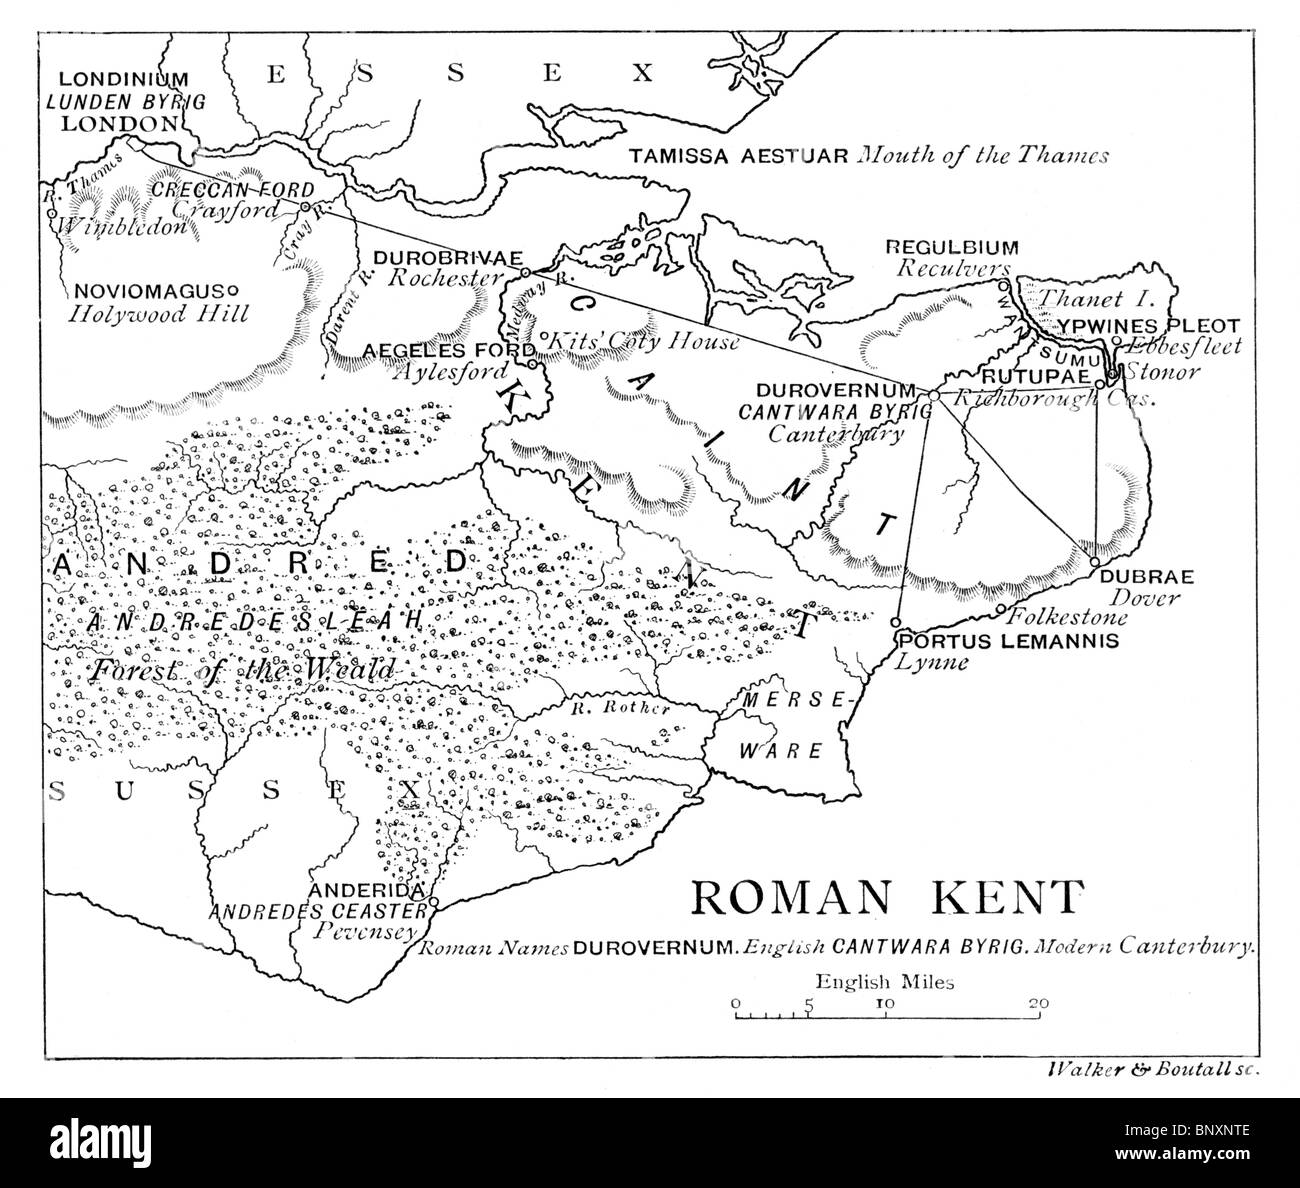 Map of Roman Kent; Black and White Illustration Stock Photo